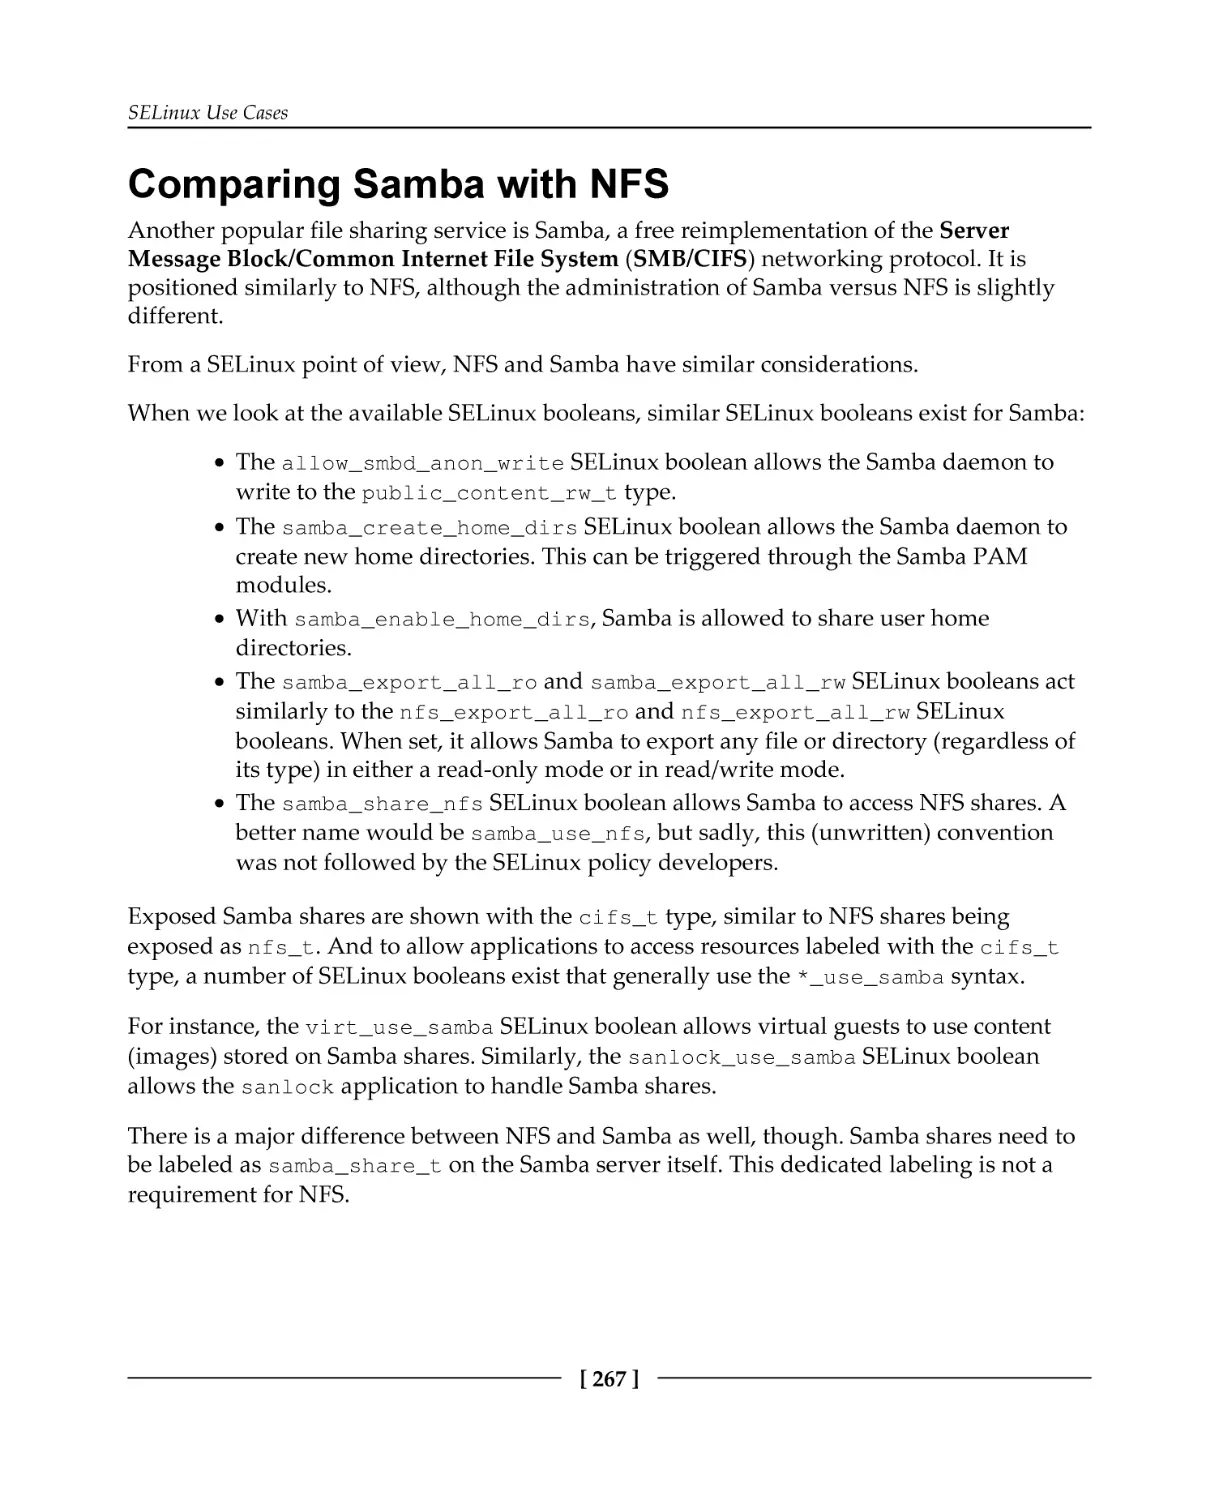 Comparing Samba with NFS